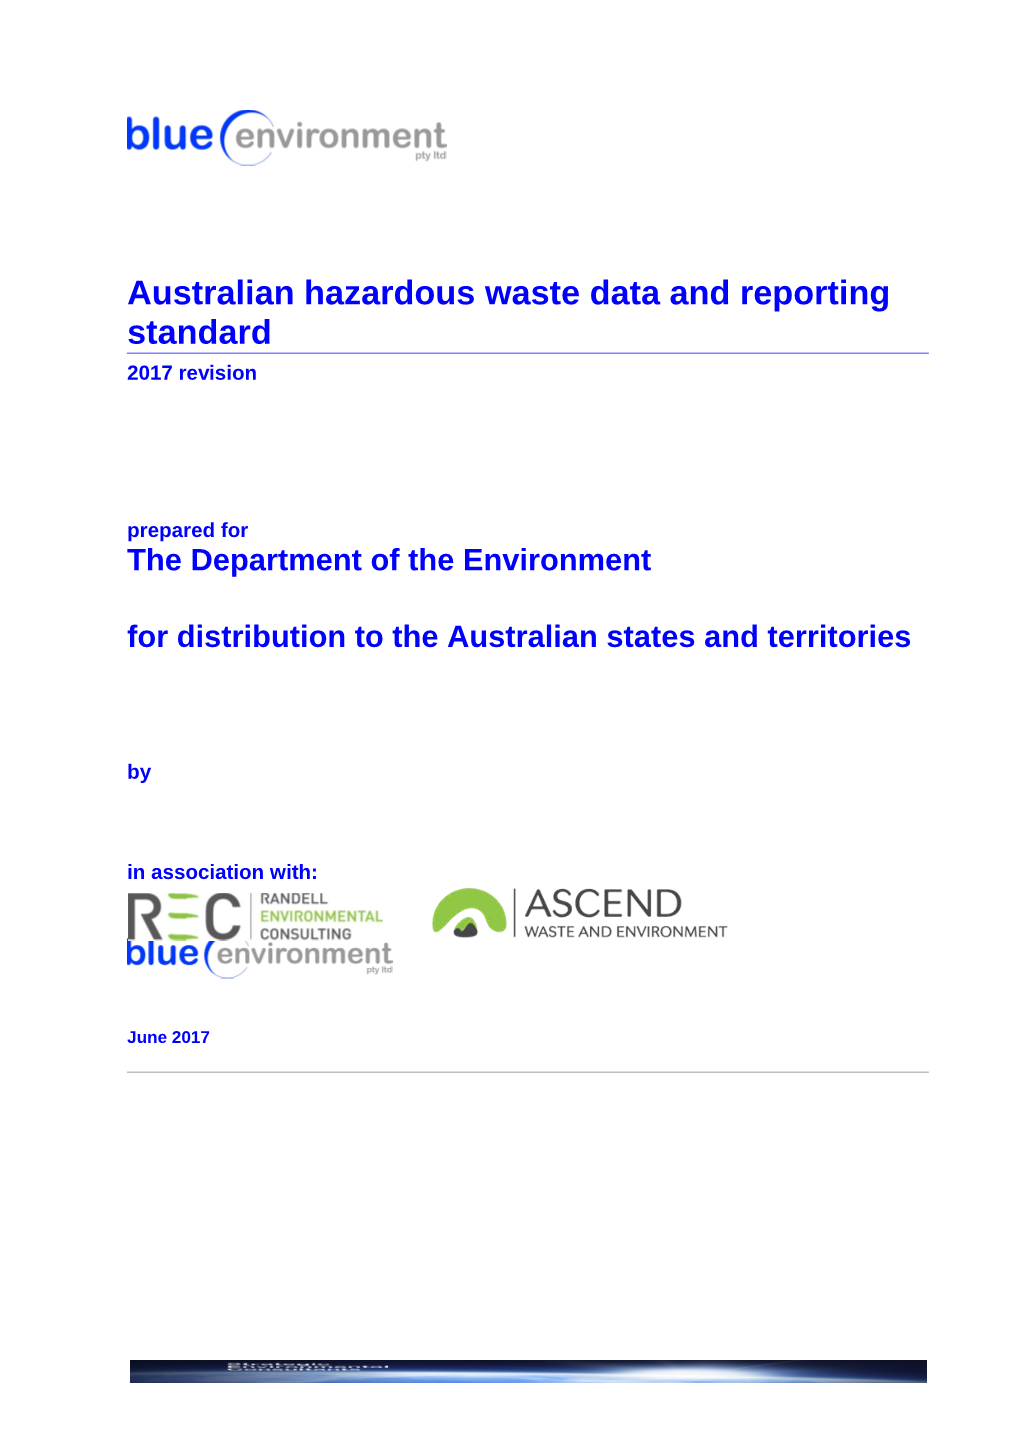 Australian Hazardous Waste Data and Reporting Standard 2017 Revision